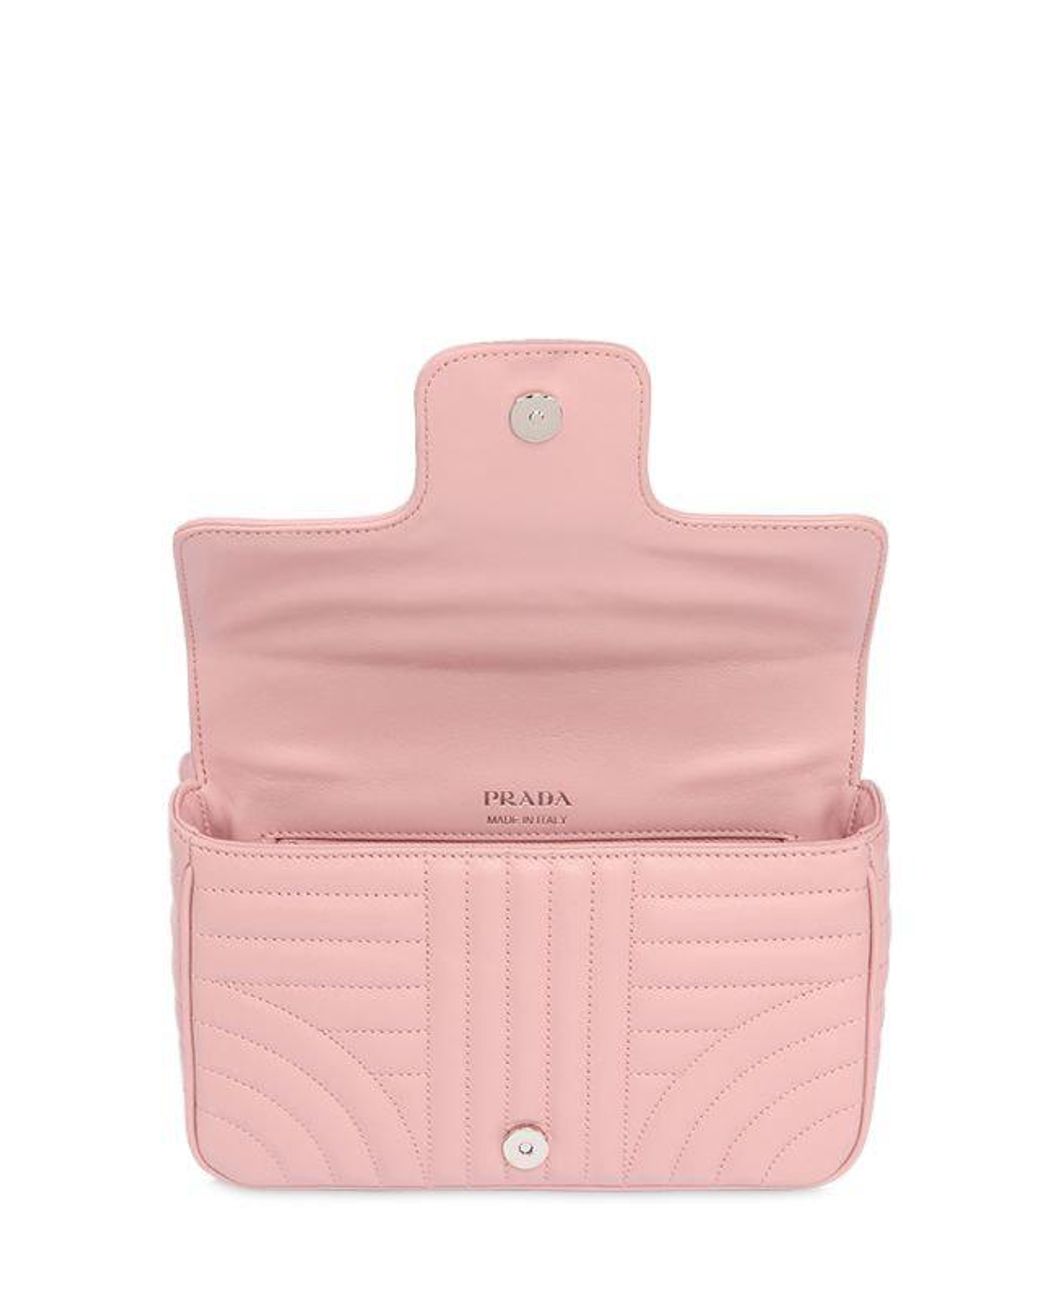 MICHAEL KORS SINCLAIR MEDIUM LEATHER BAG Woman Soft pink | Mascheroni Store